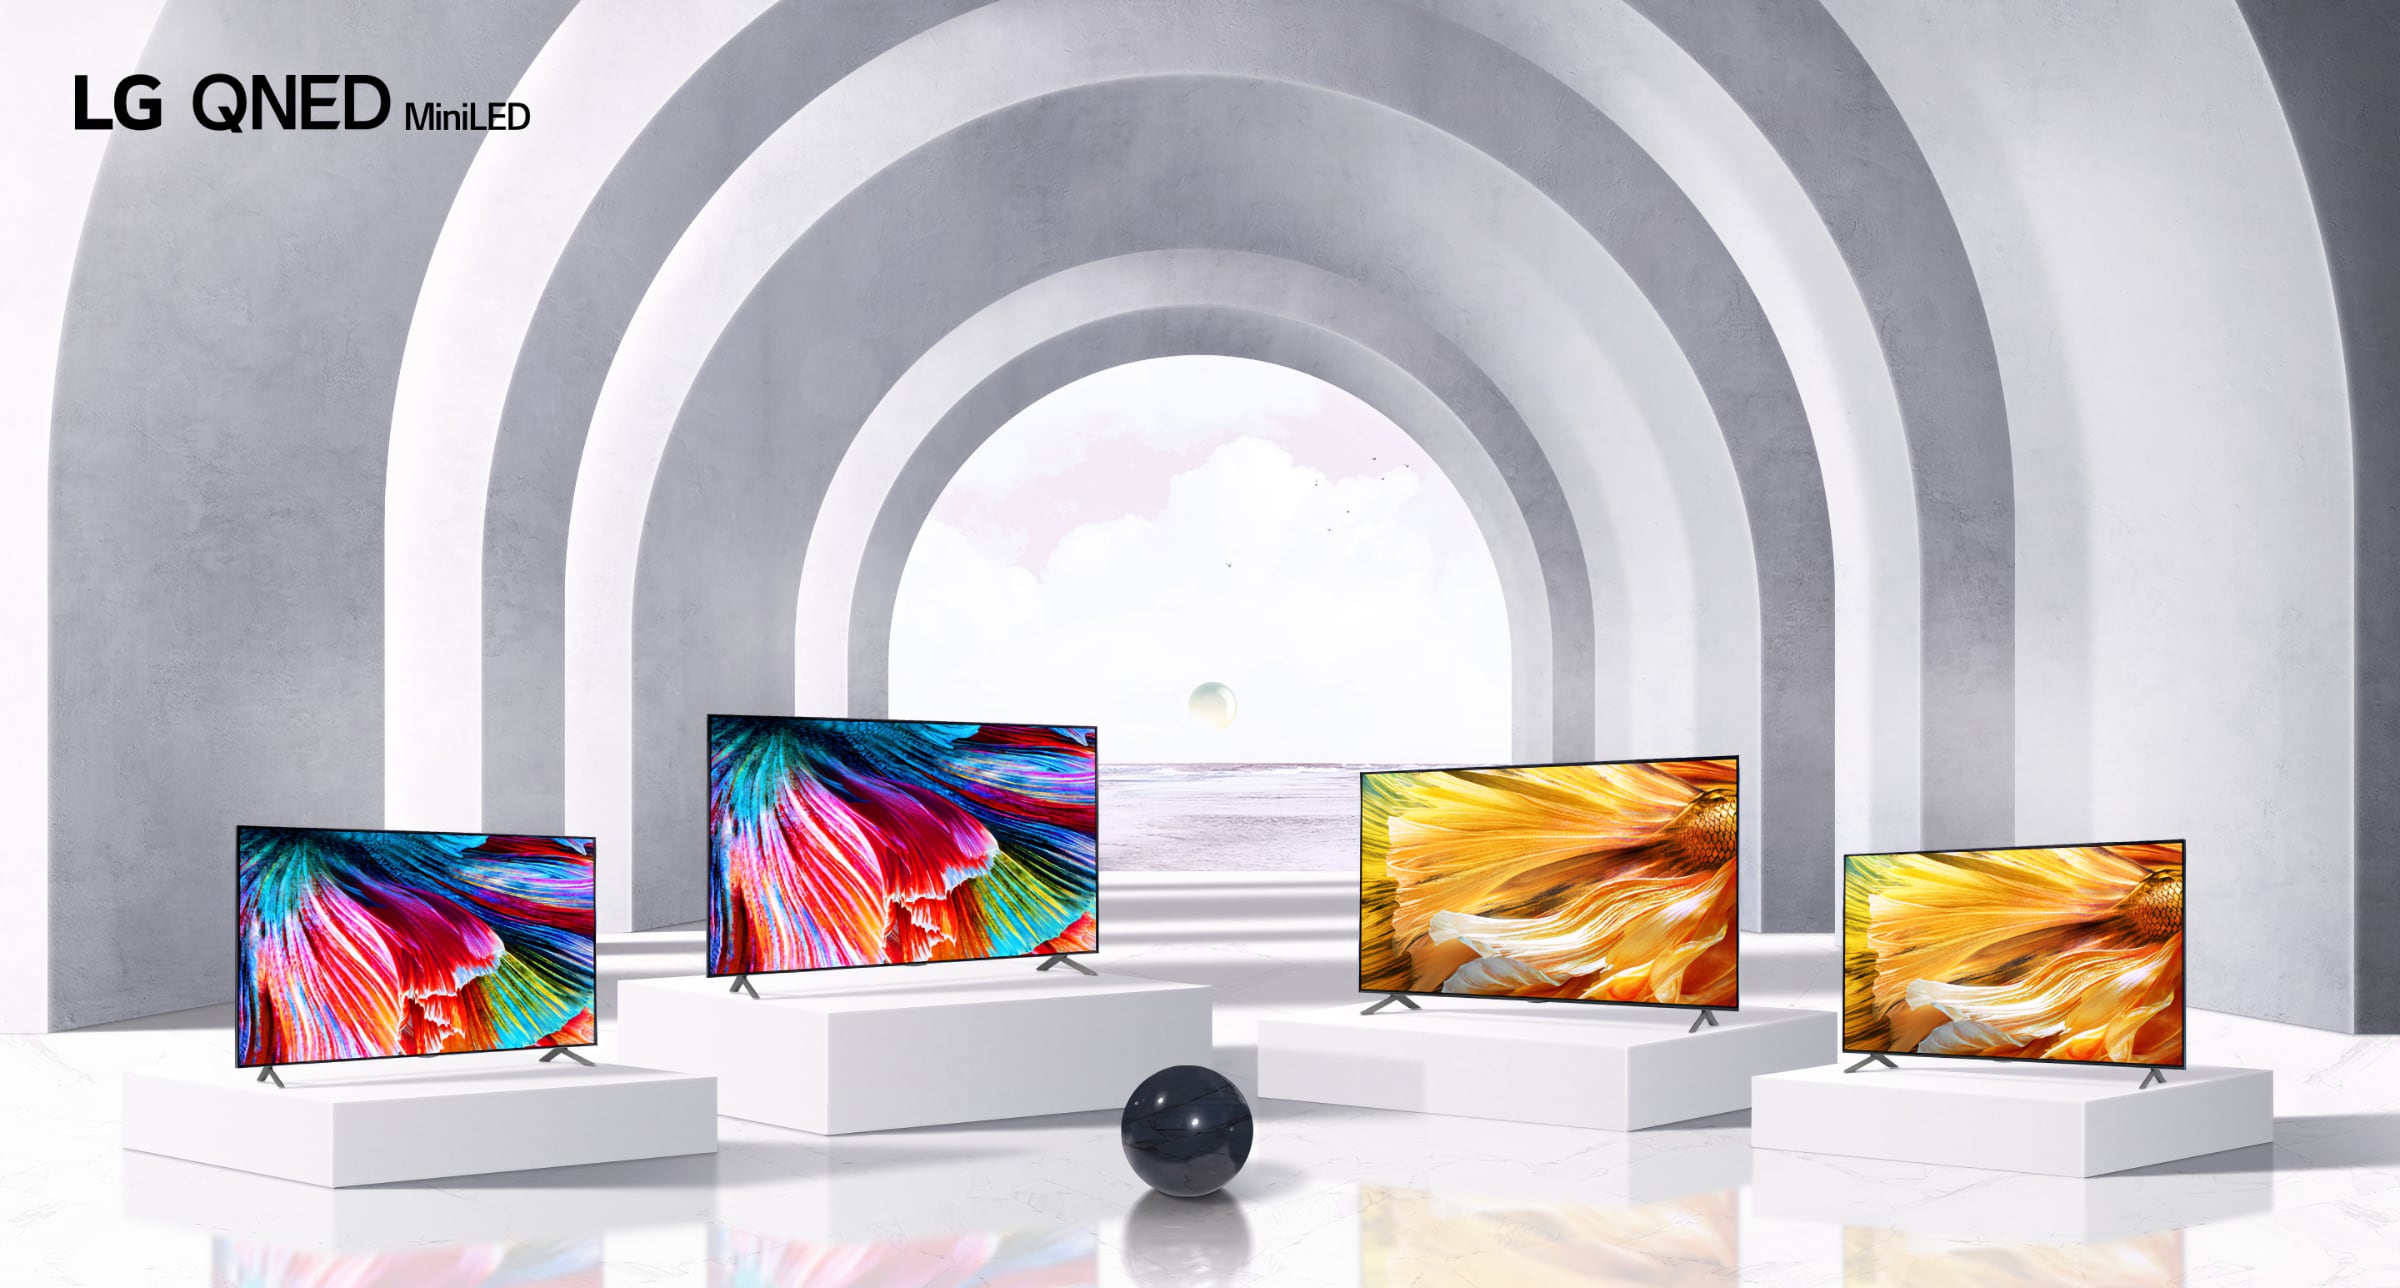 LG QNED miniLED LCD TVs